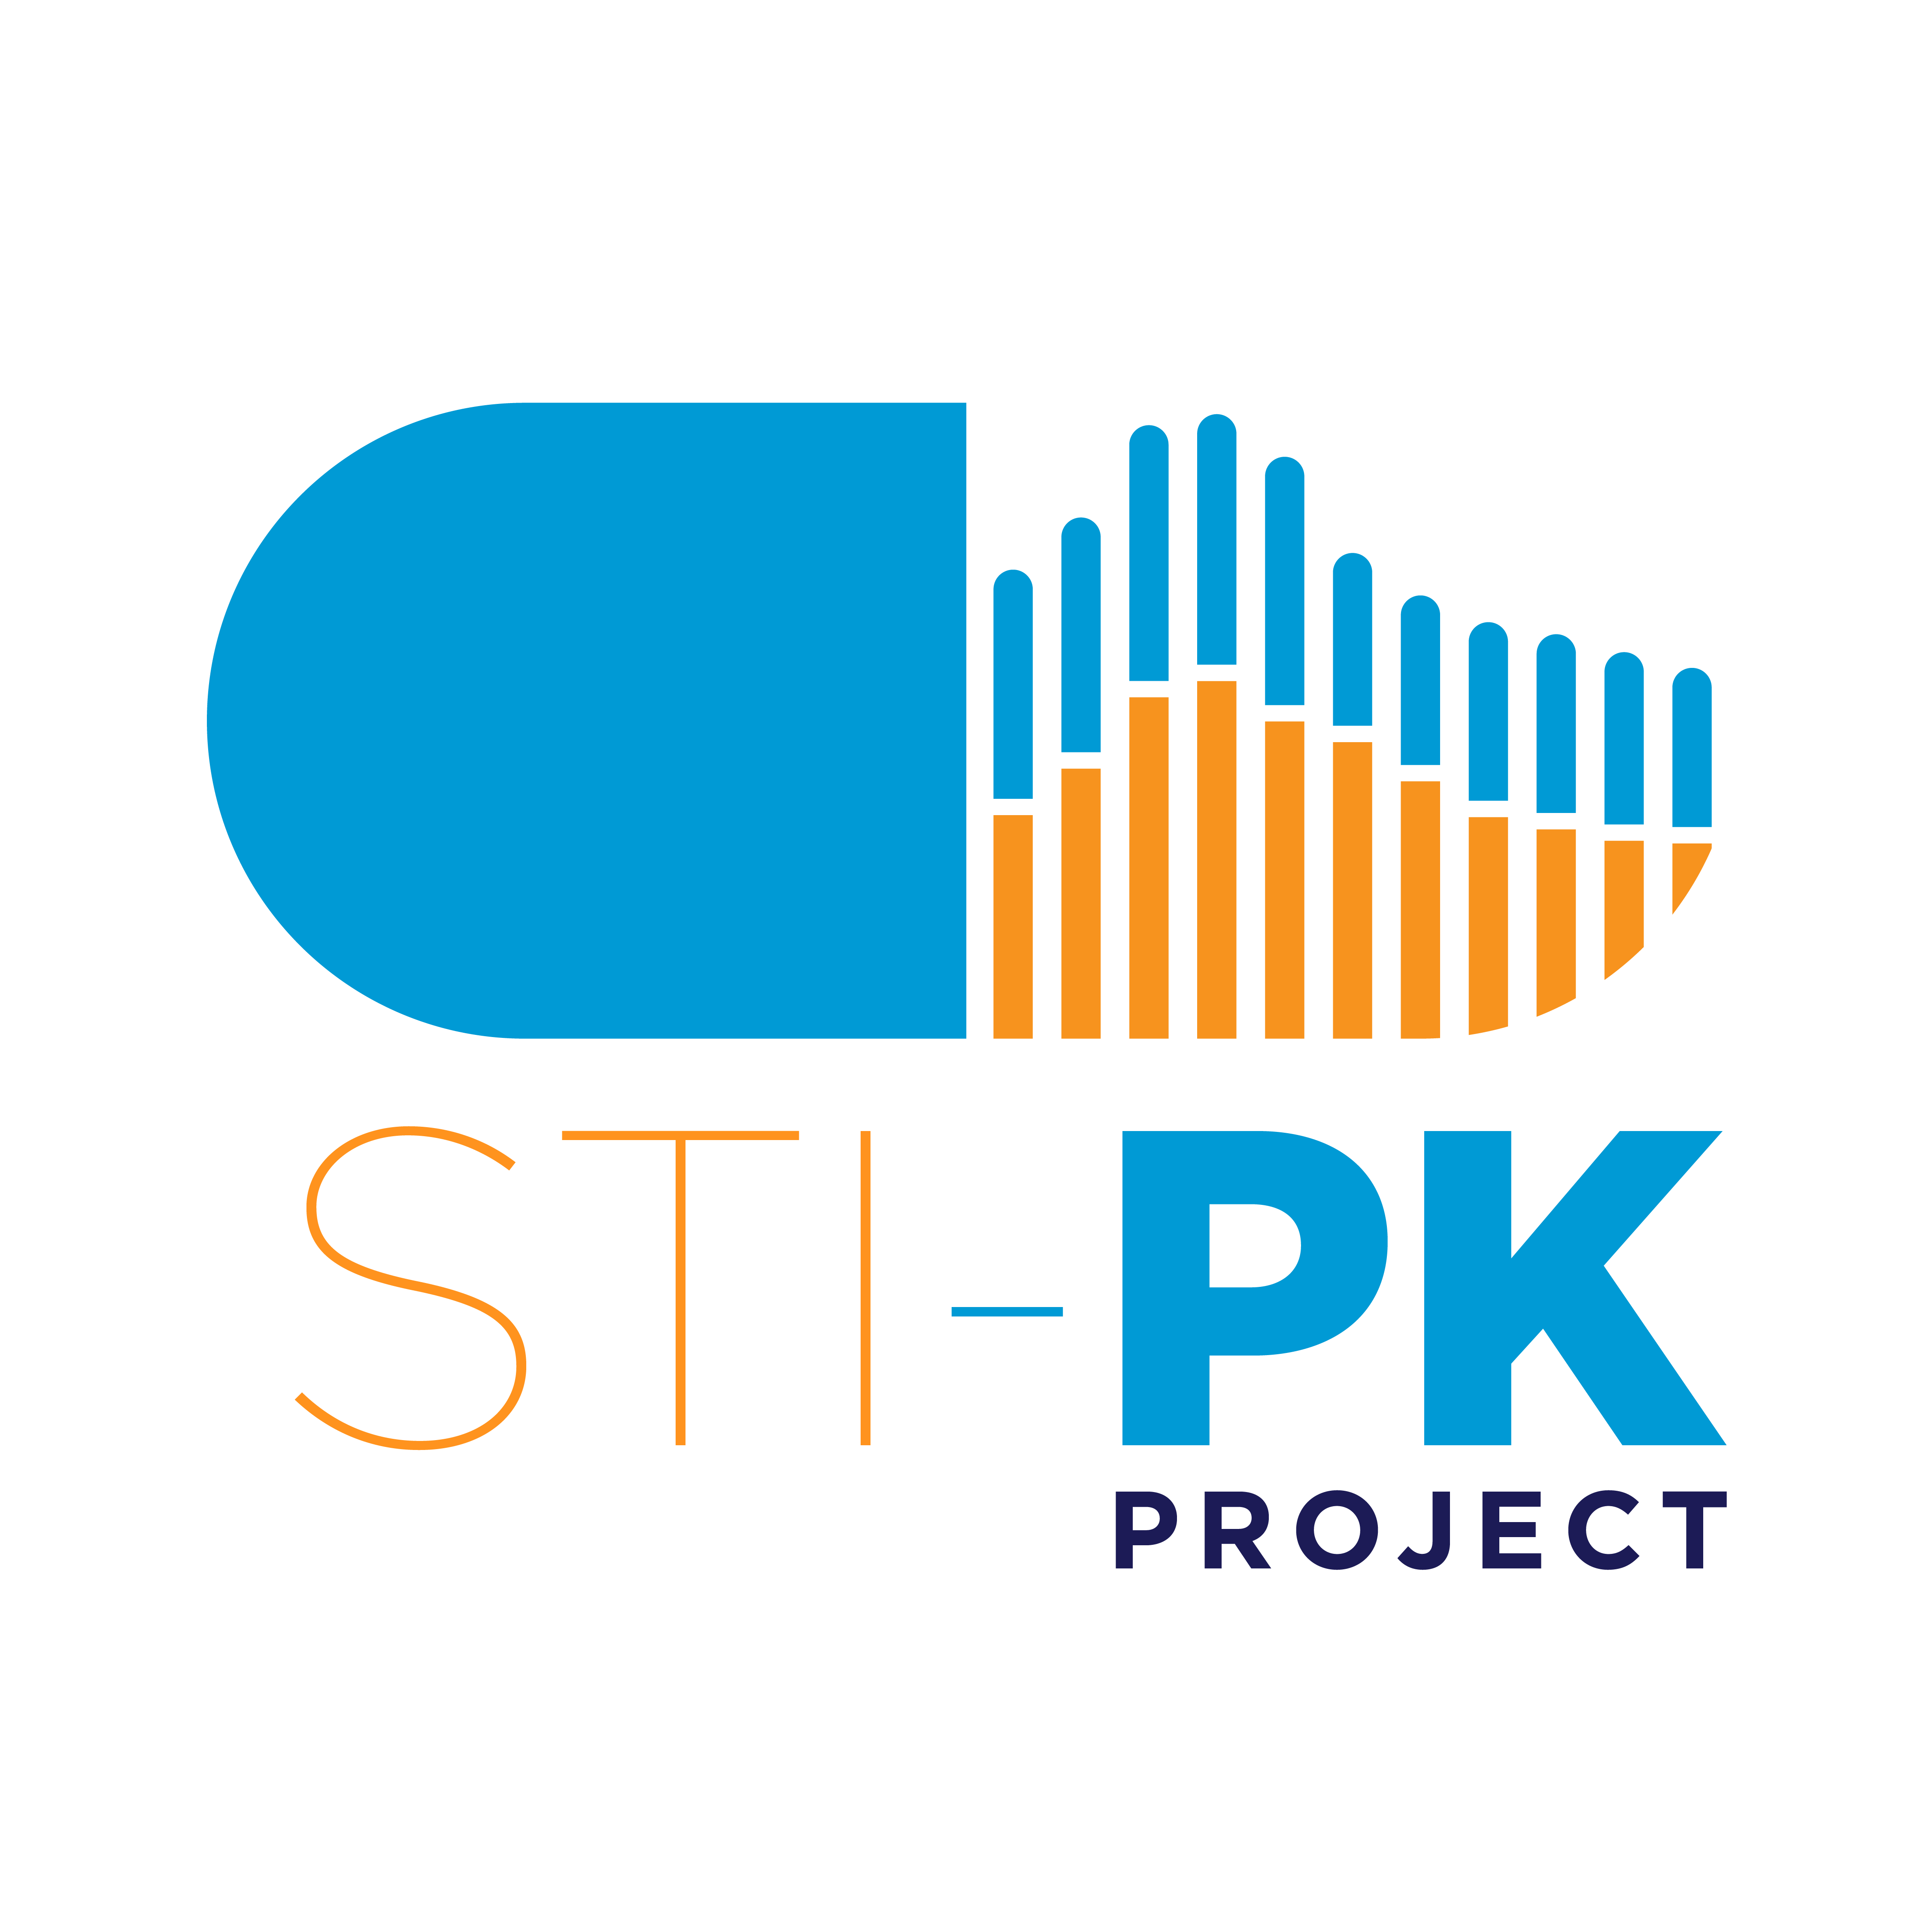 STD-PK project